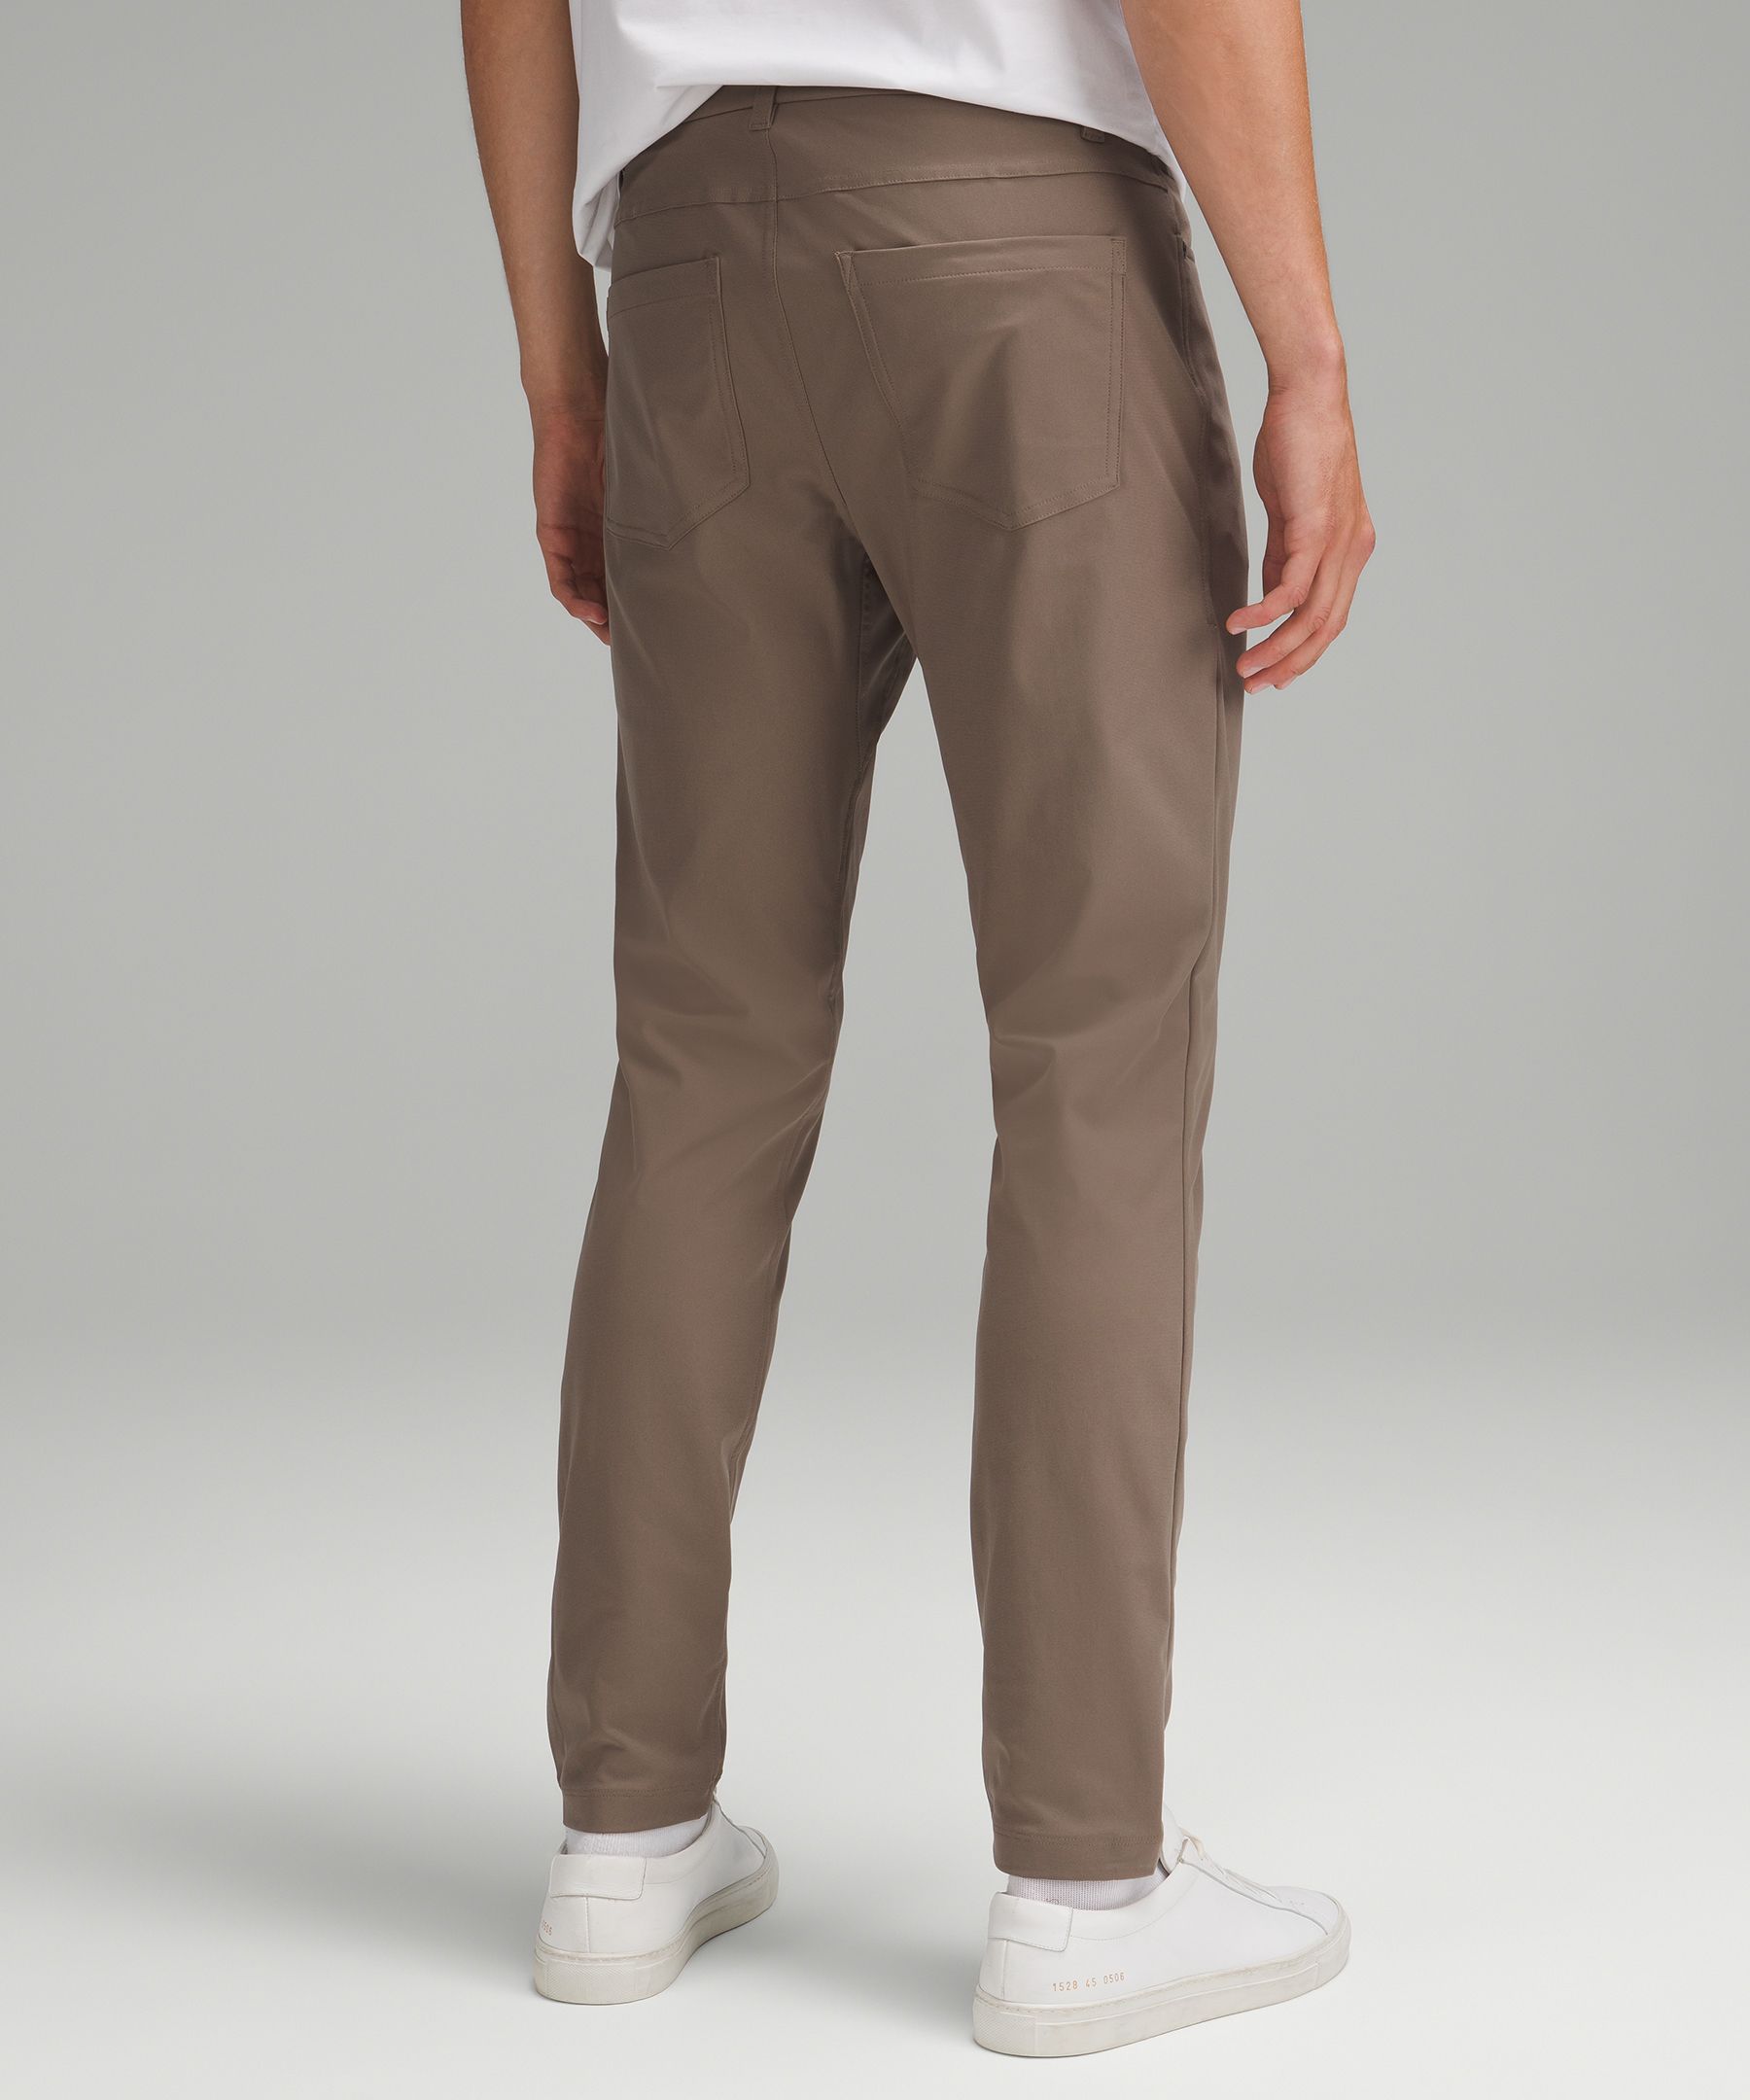 lululemon ABC Slim-Fit Pant 34 L Warpstreme Trench Size:32 MSRP $128.00  *NEW*